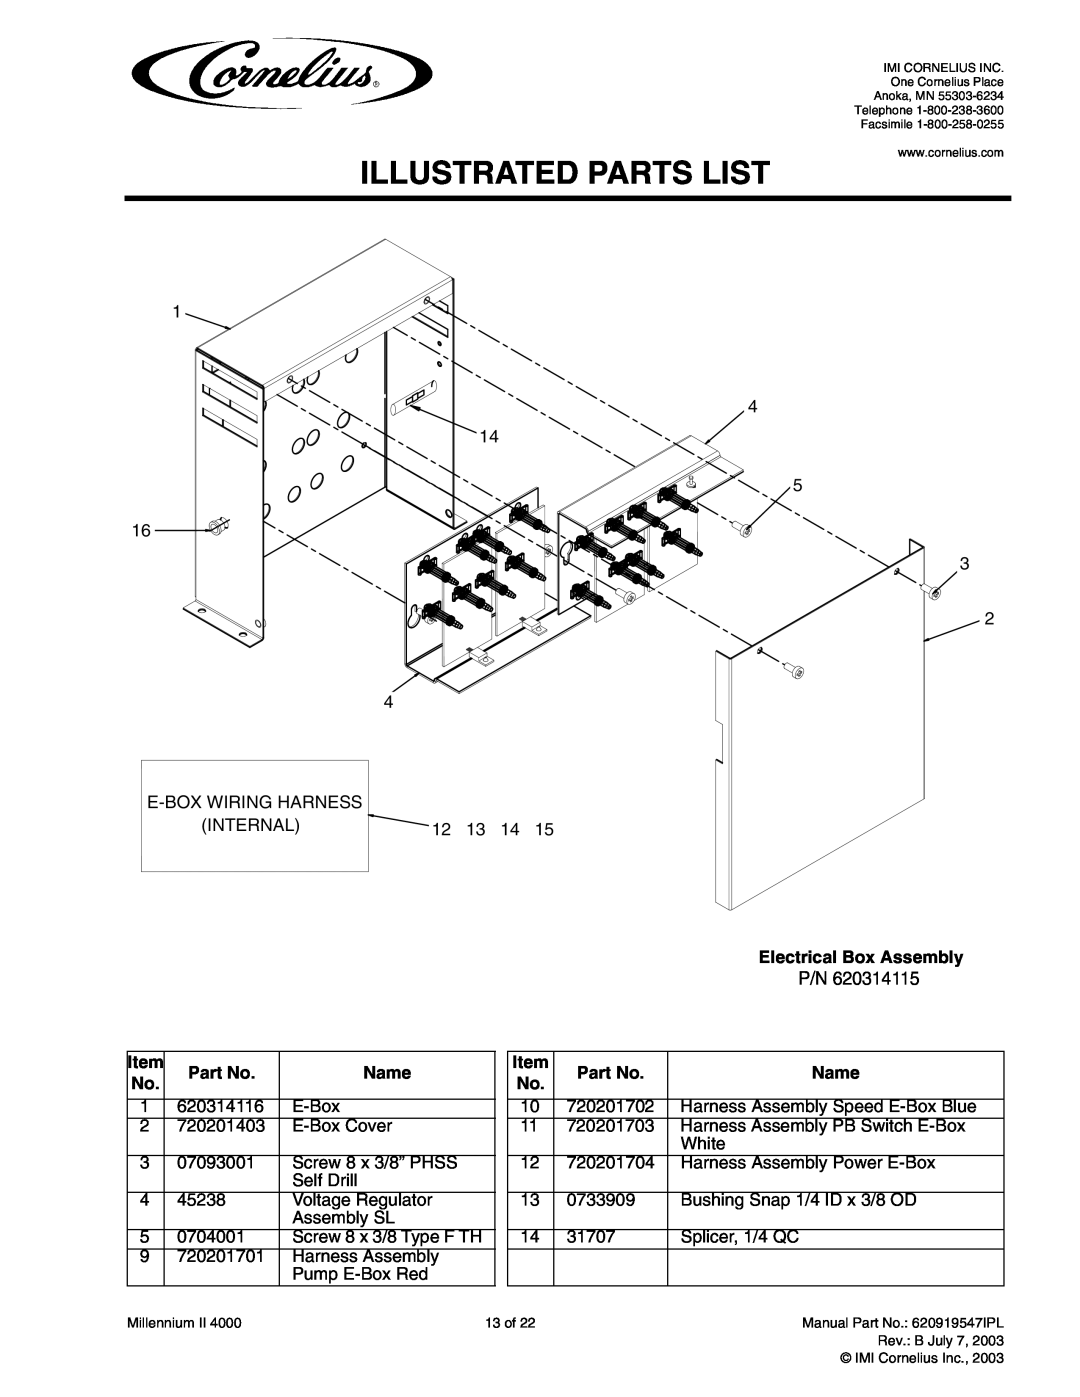 Cornelius MJ32-4 PB, MJ32-4 PC, MJ30-4 PB Illustrated Parts List, E-Box Wiring Harness, Electrical Box Assembly, Name 